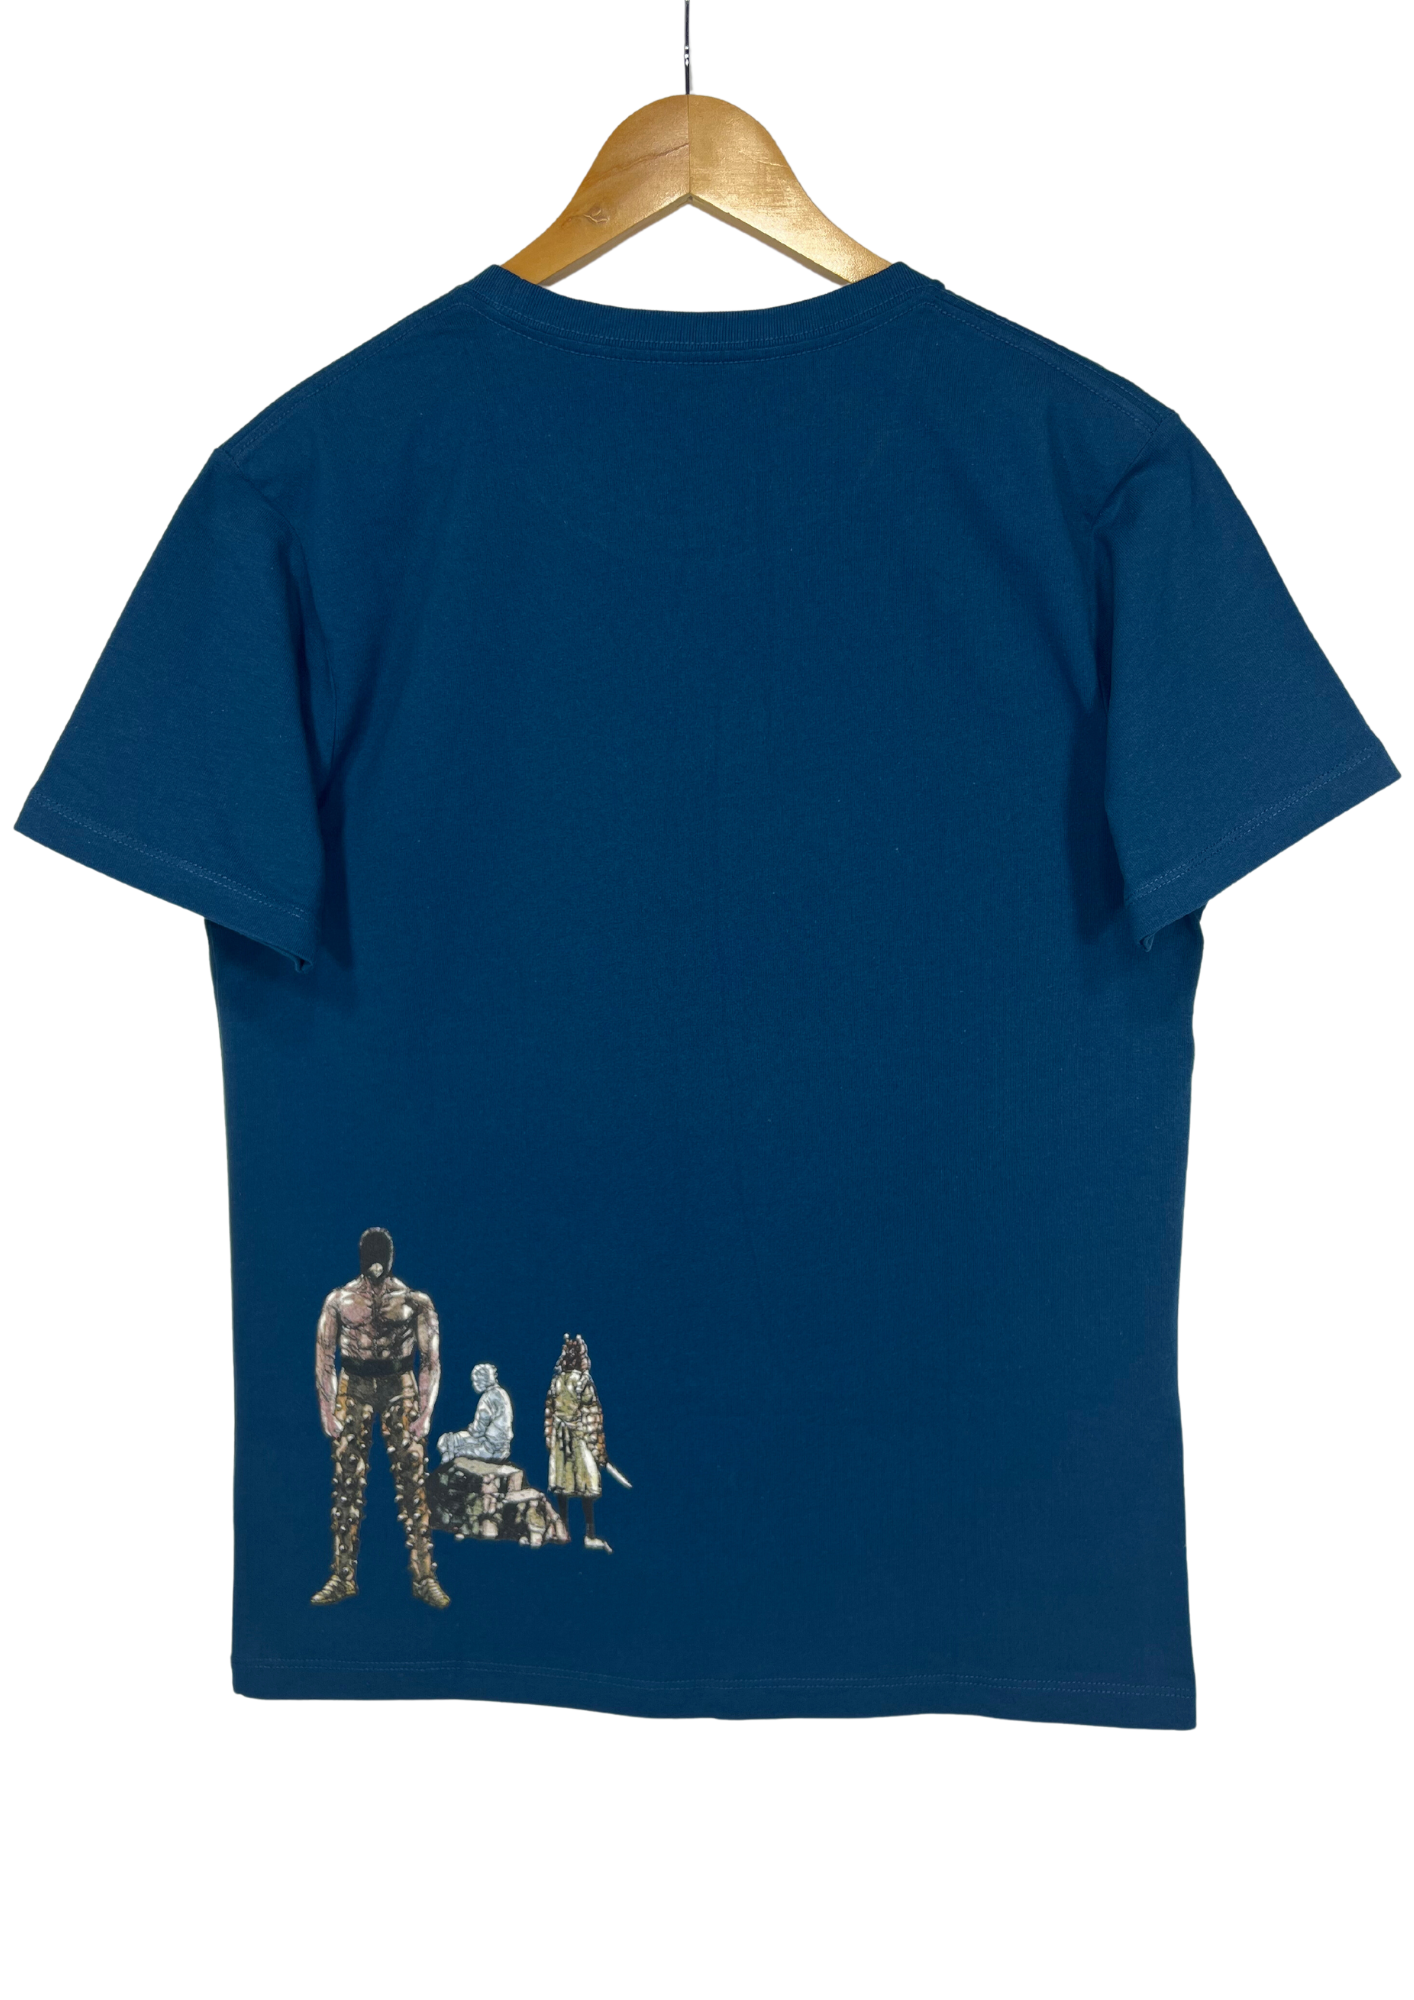 Dorohedoro x Graniph En Family T-shirt